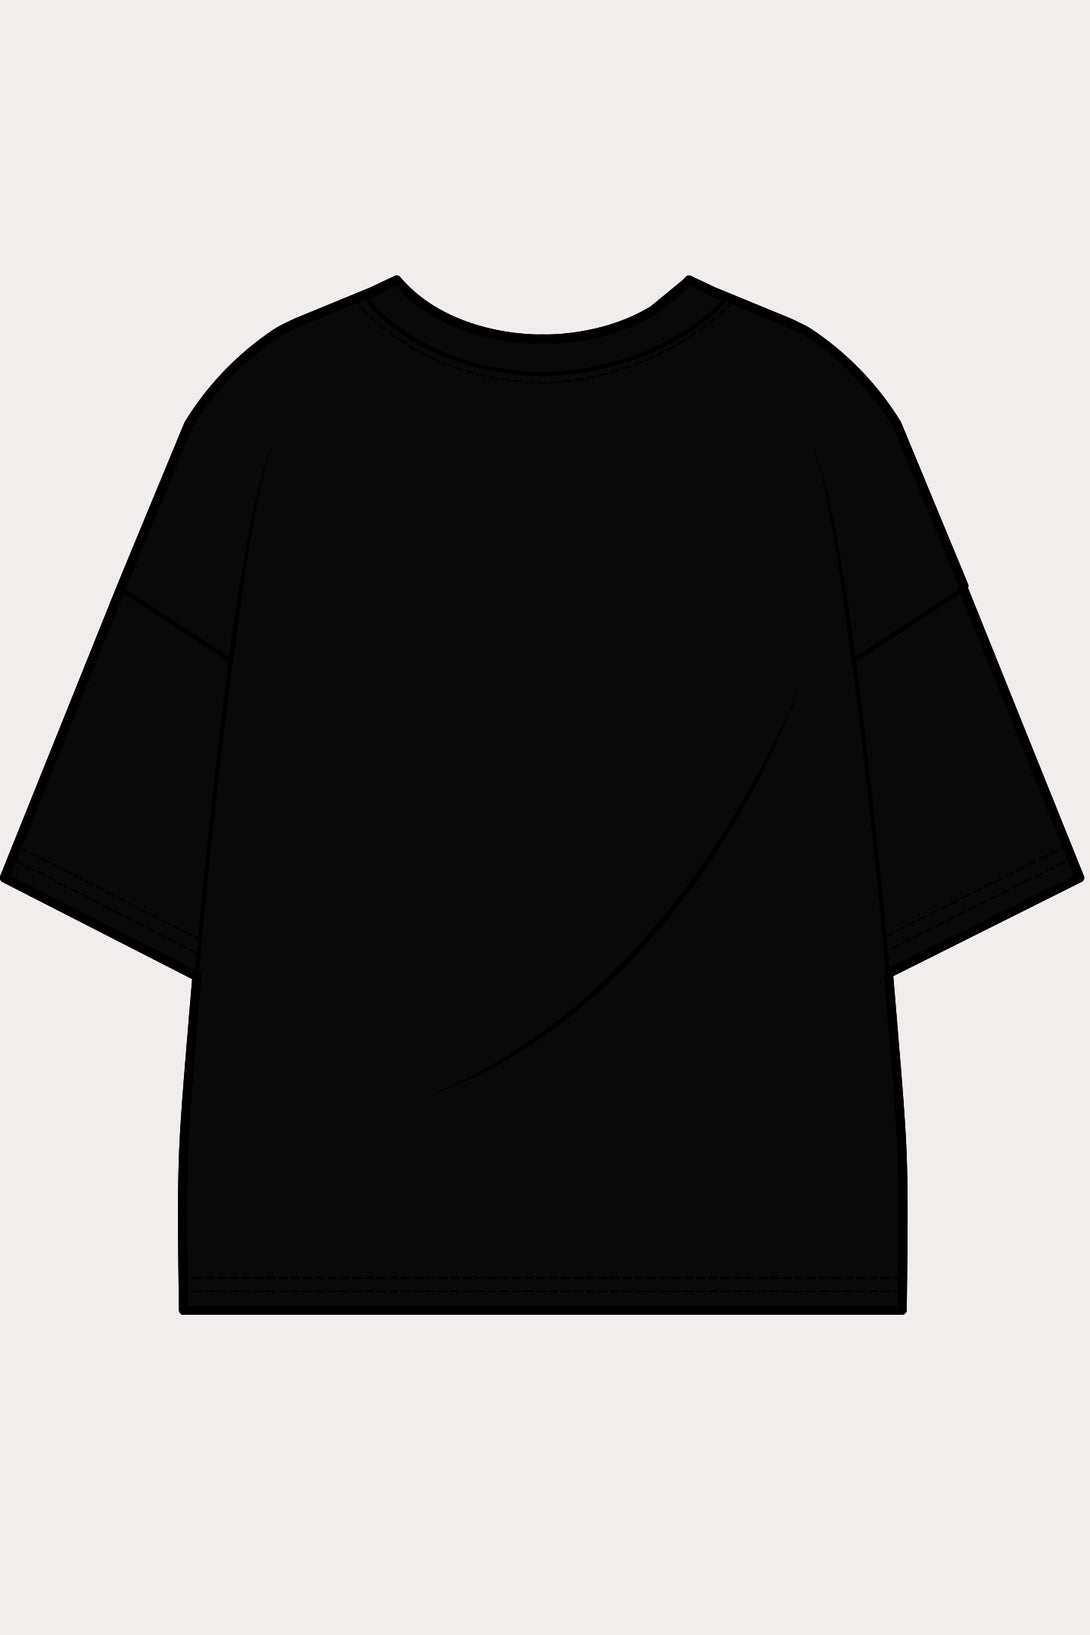 Black color oversized t-shirt back view.